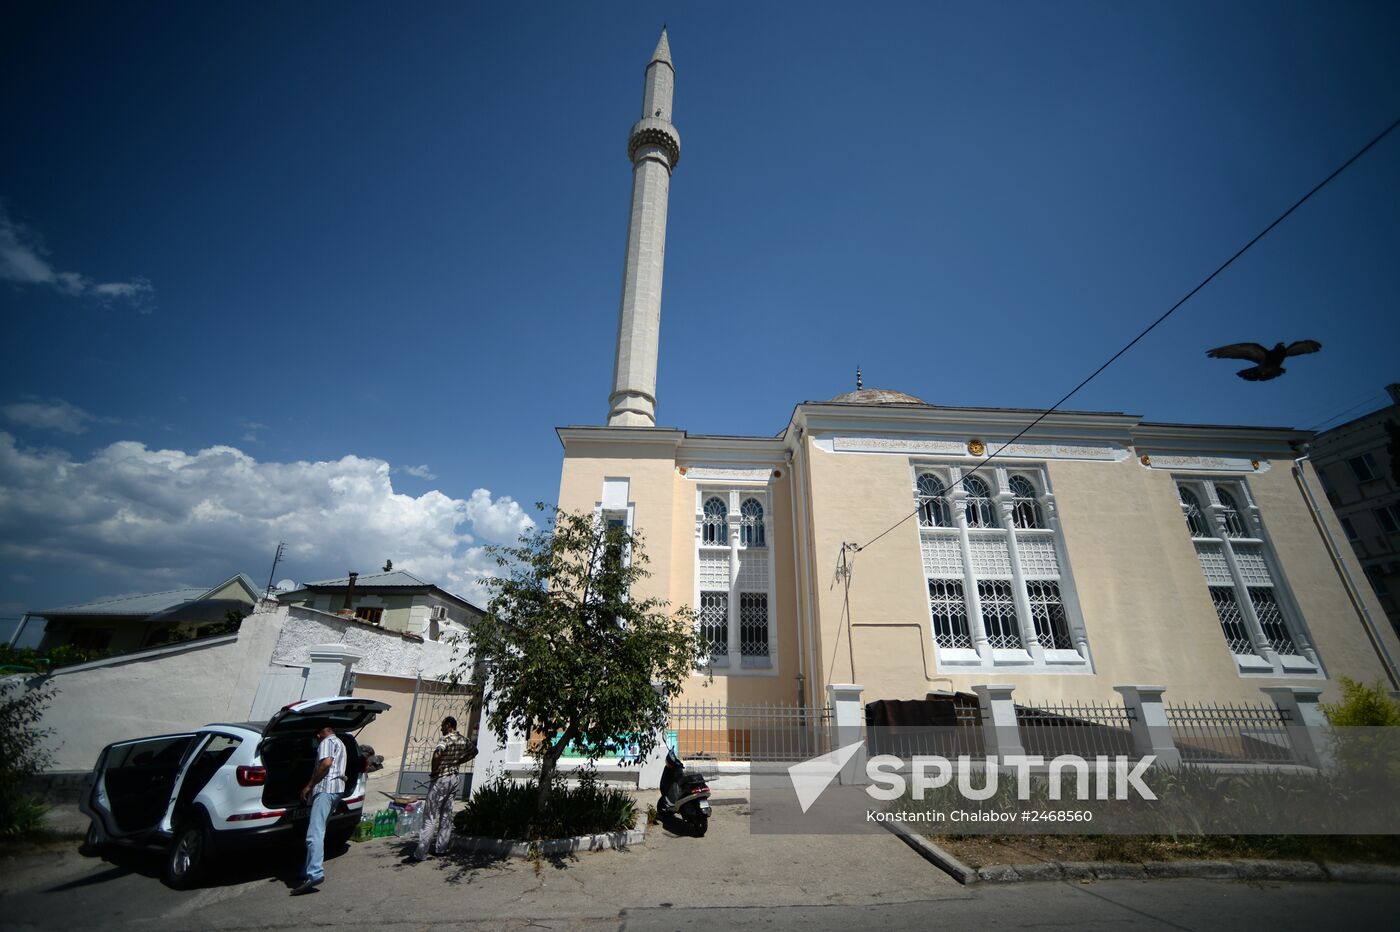 Sevastopol's central mosque